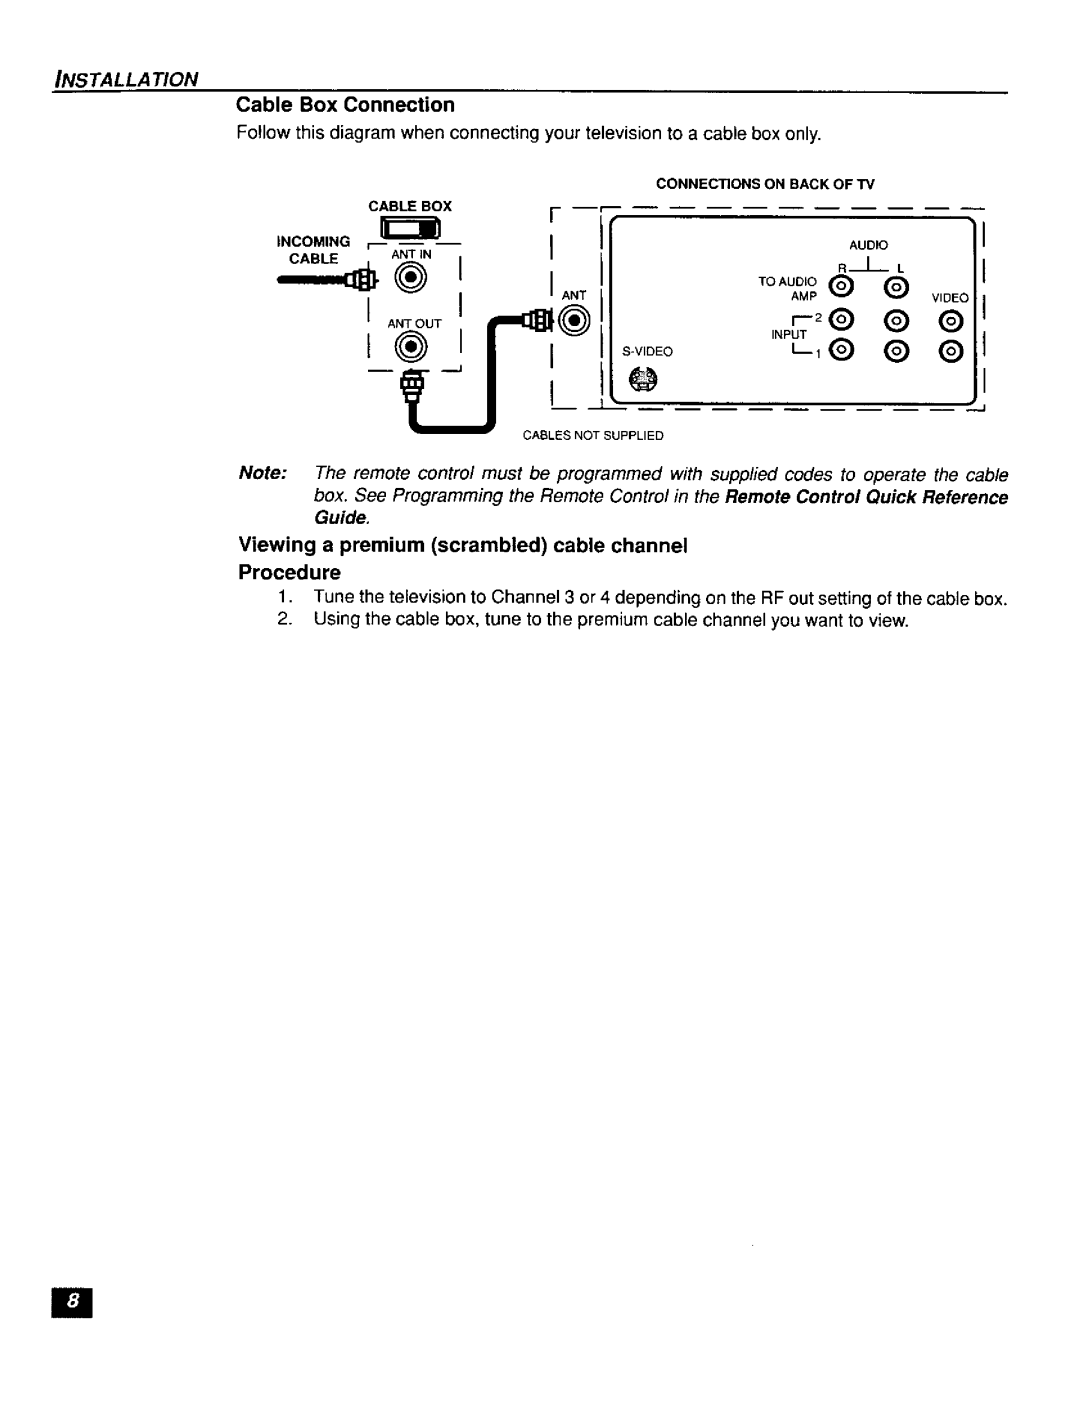 Panasonic CT-F2111X manual L,Q Q, Cable Box Connection, Viewing a premium scrambled cable channel Procedure, Installa Tion 